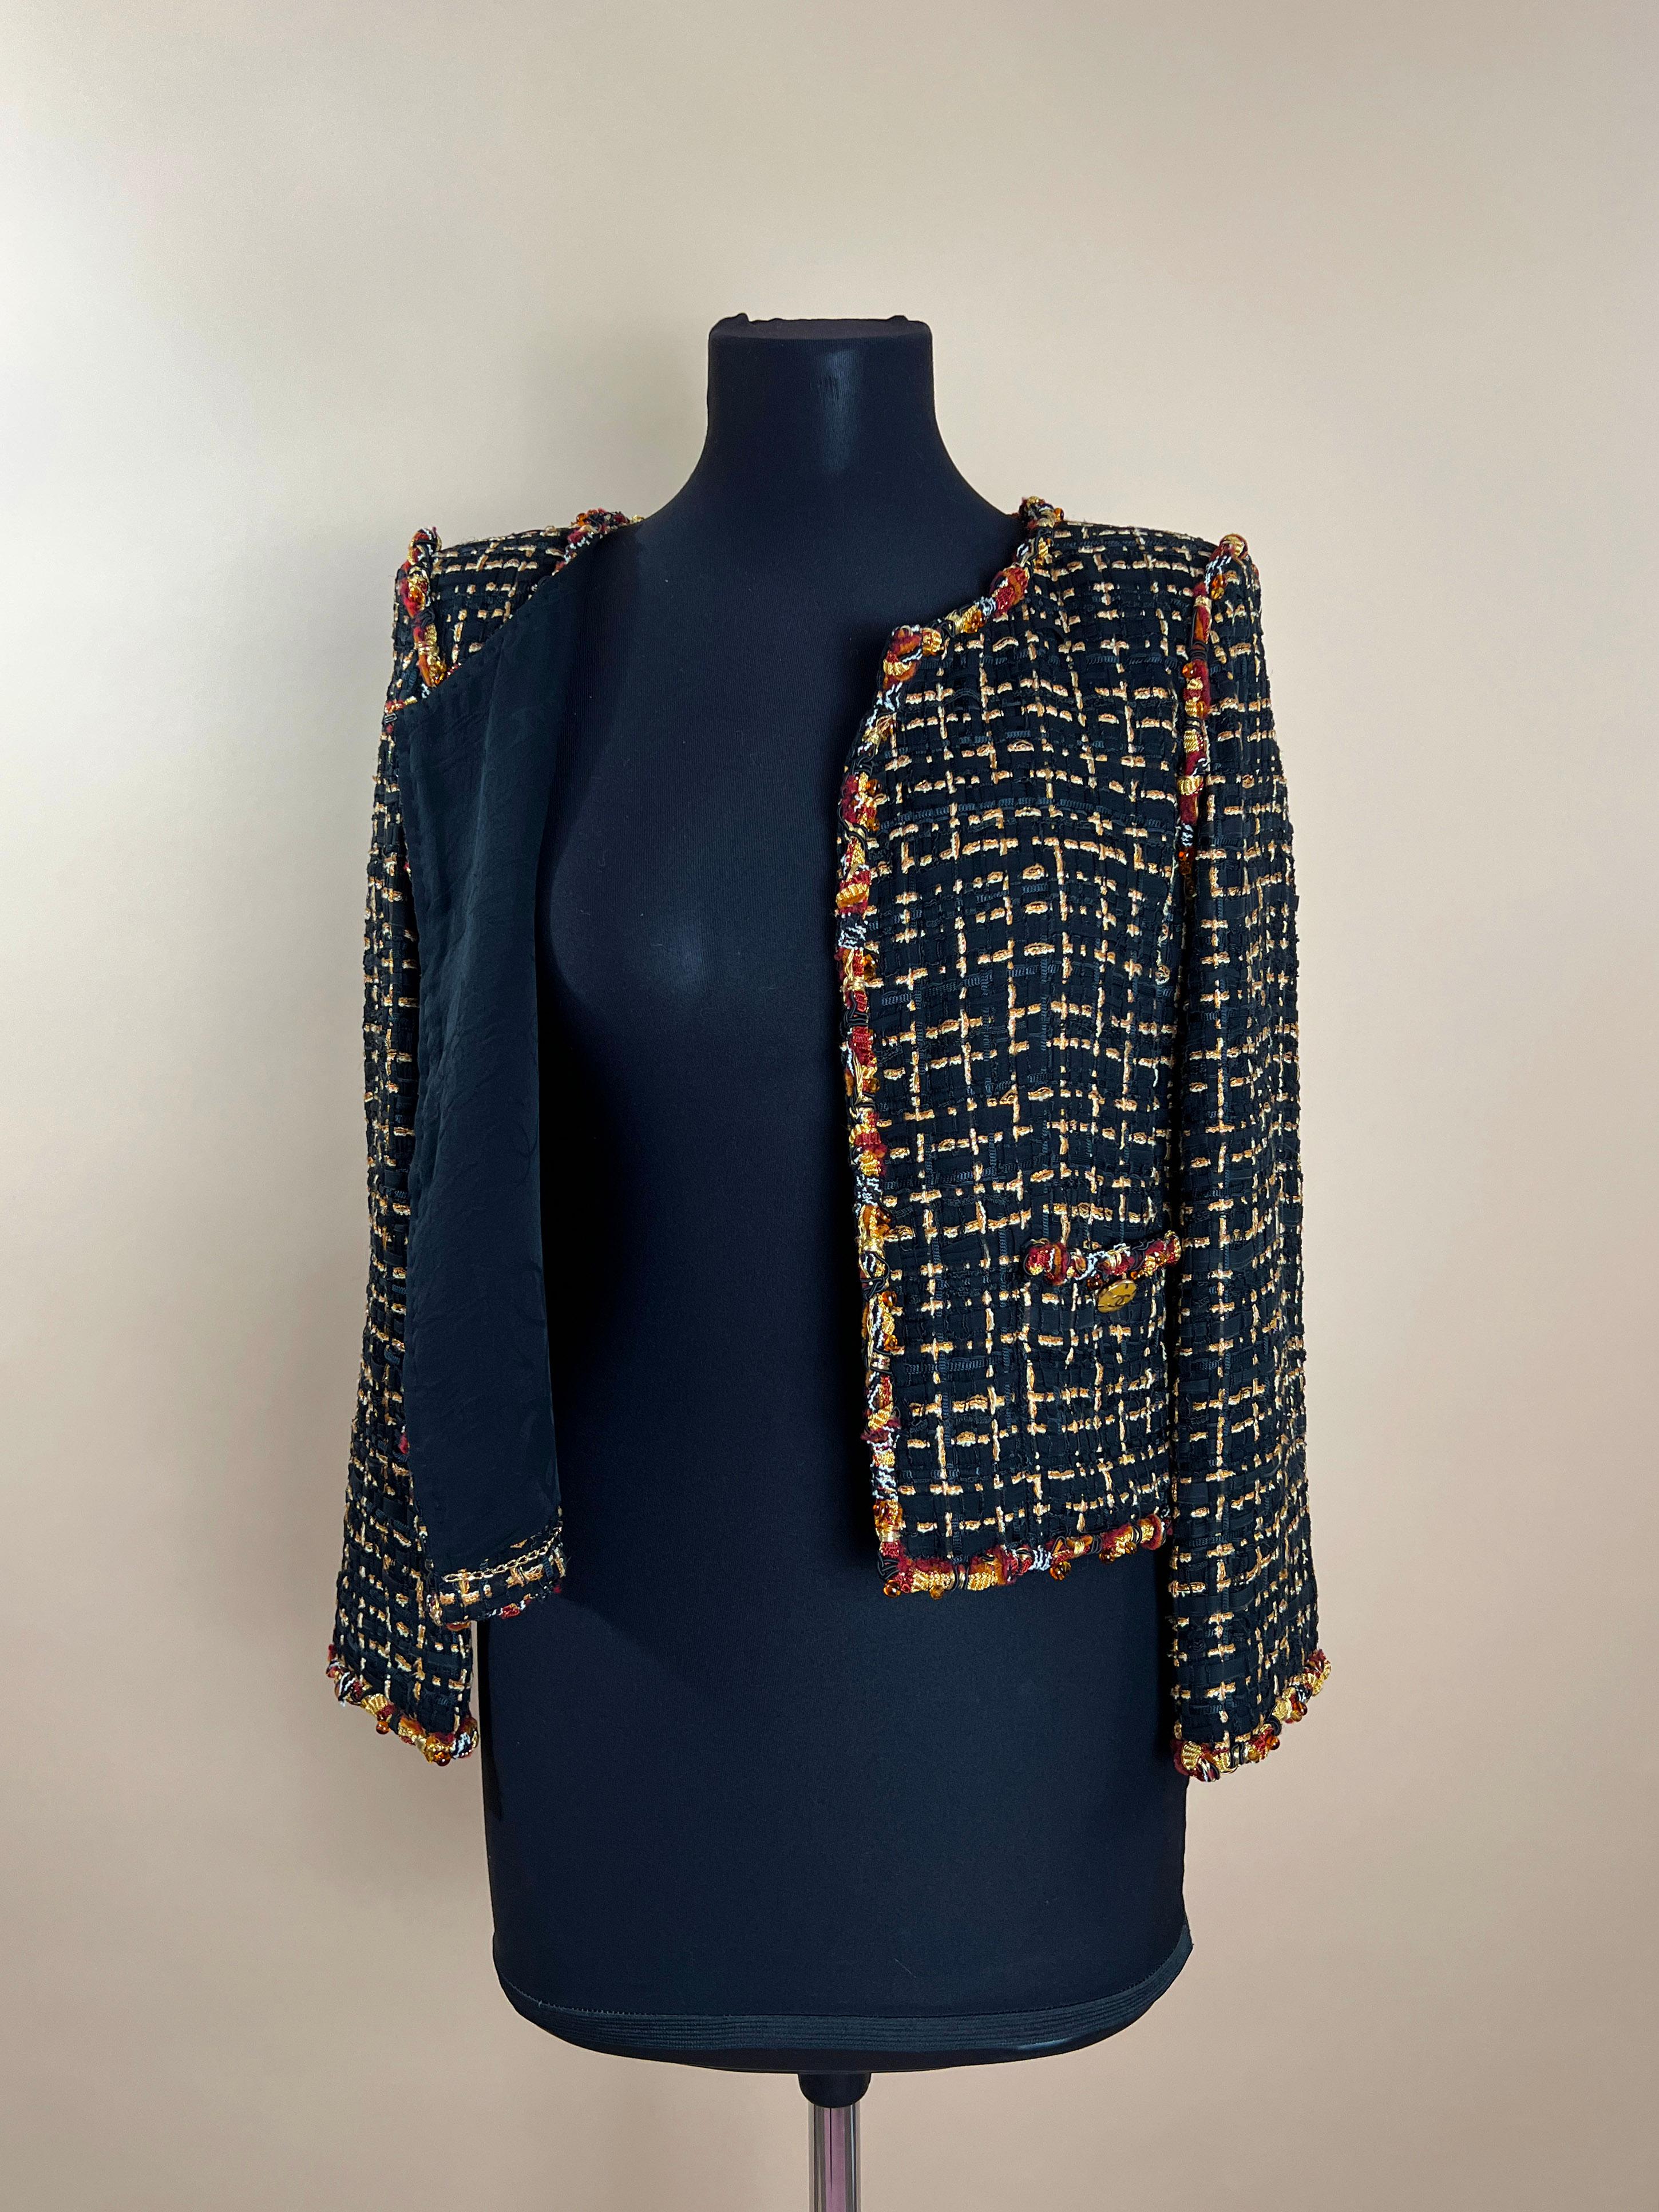 Chanel Ribbon Tweed Jewel Embellished Jacket 9